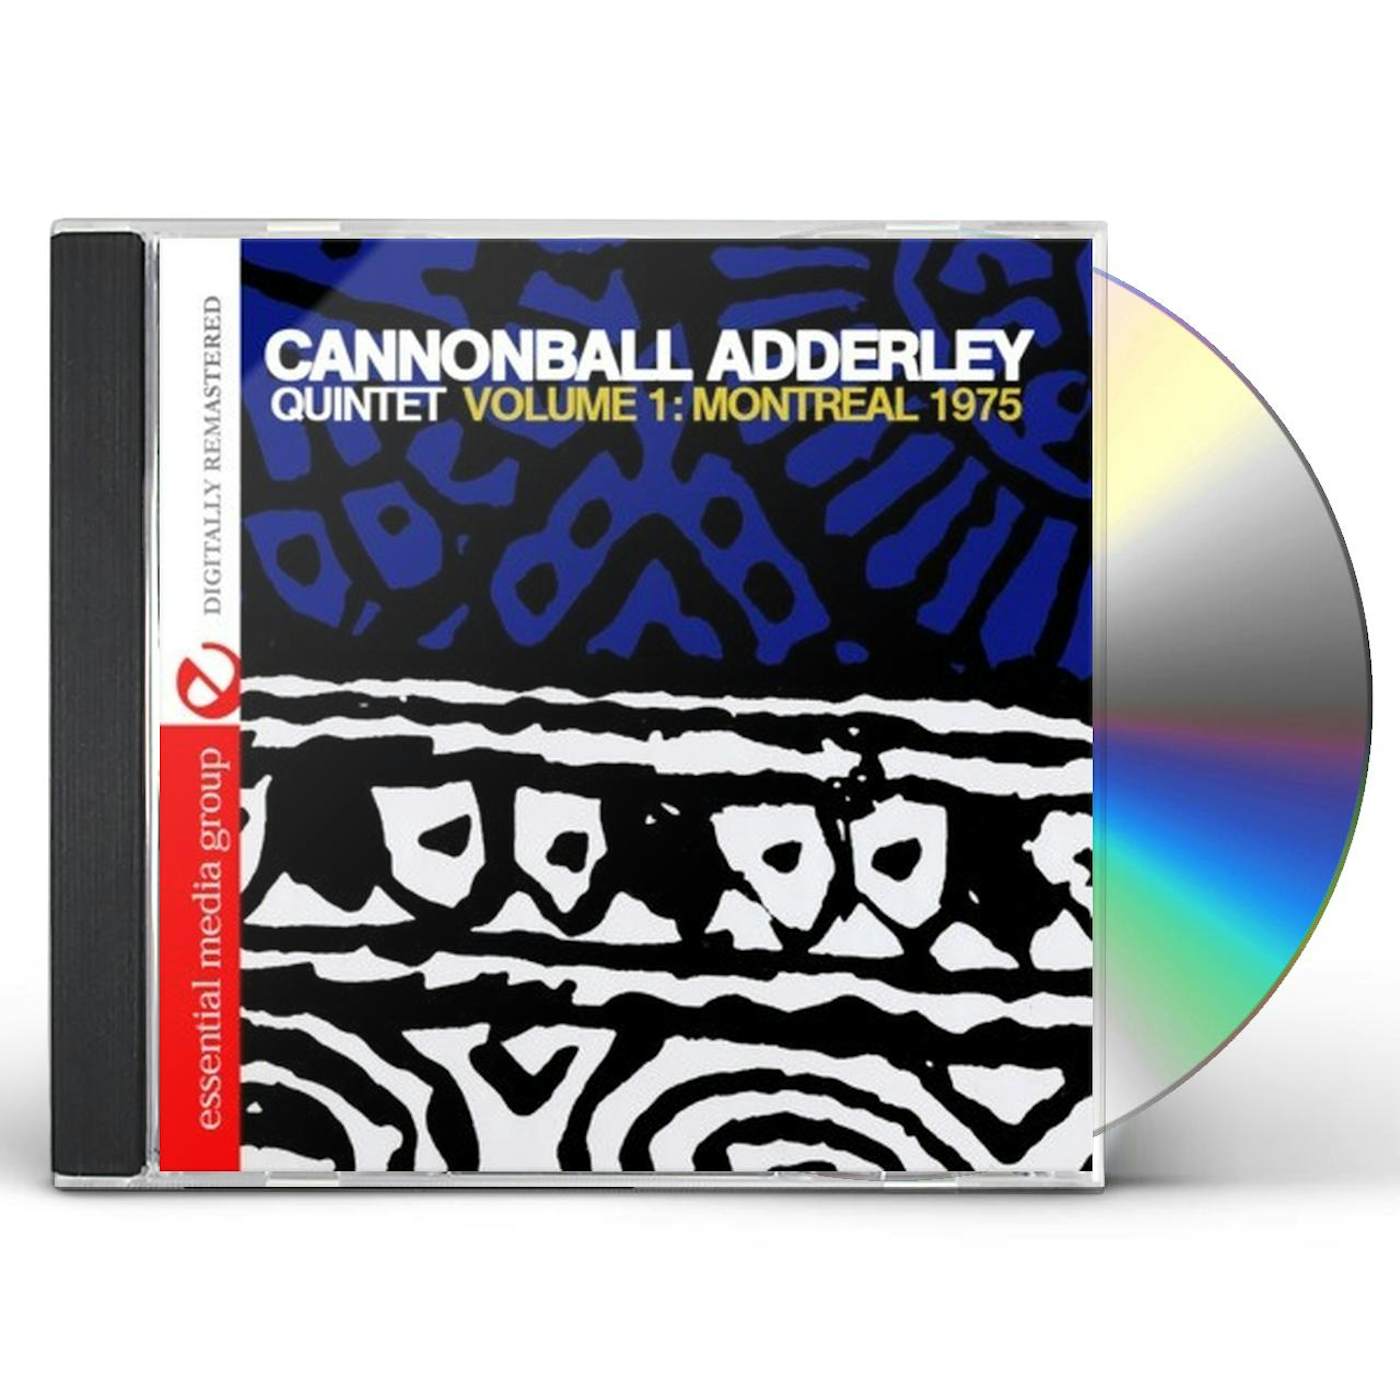 Cannonball Adderley VOLUME 1: MONTREAL 1975 CD